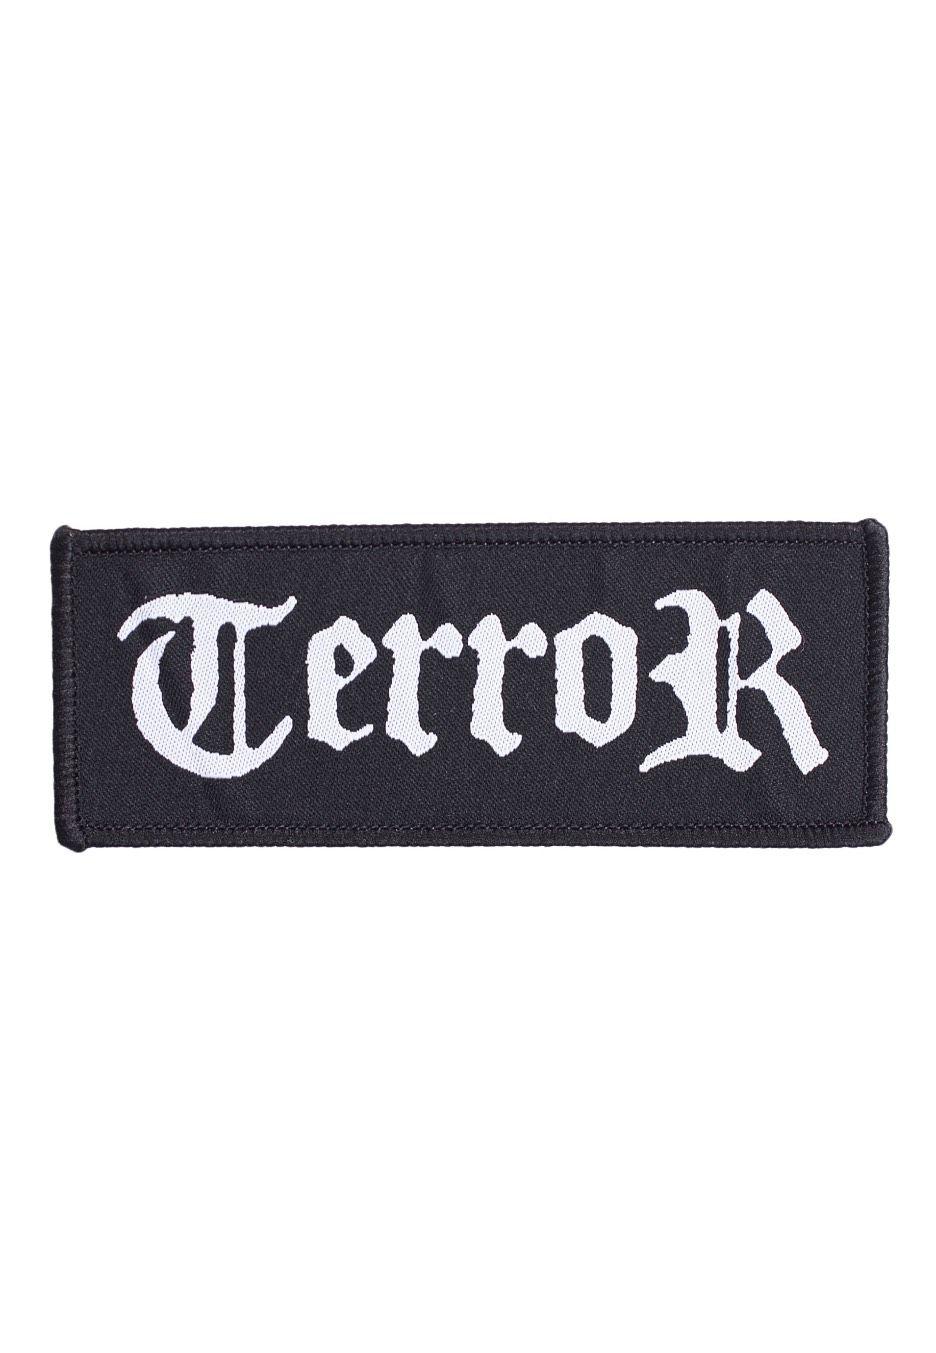 Terror Logo - Terror.com Worldwide